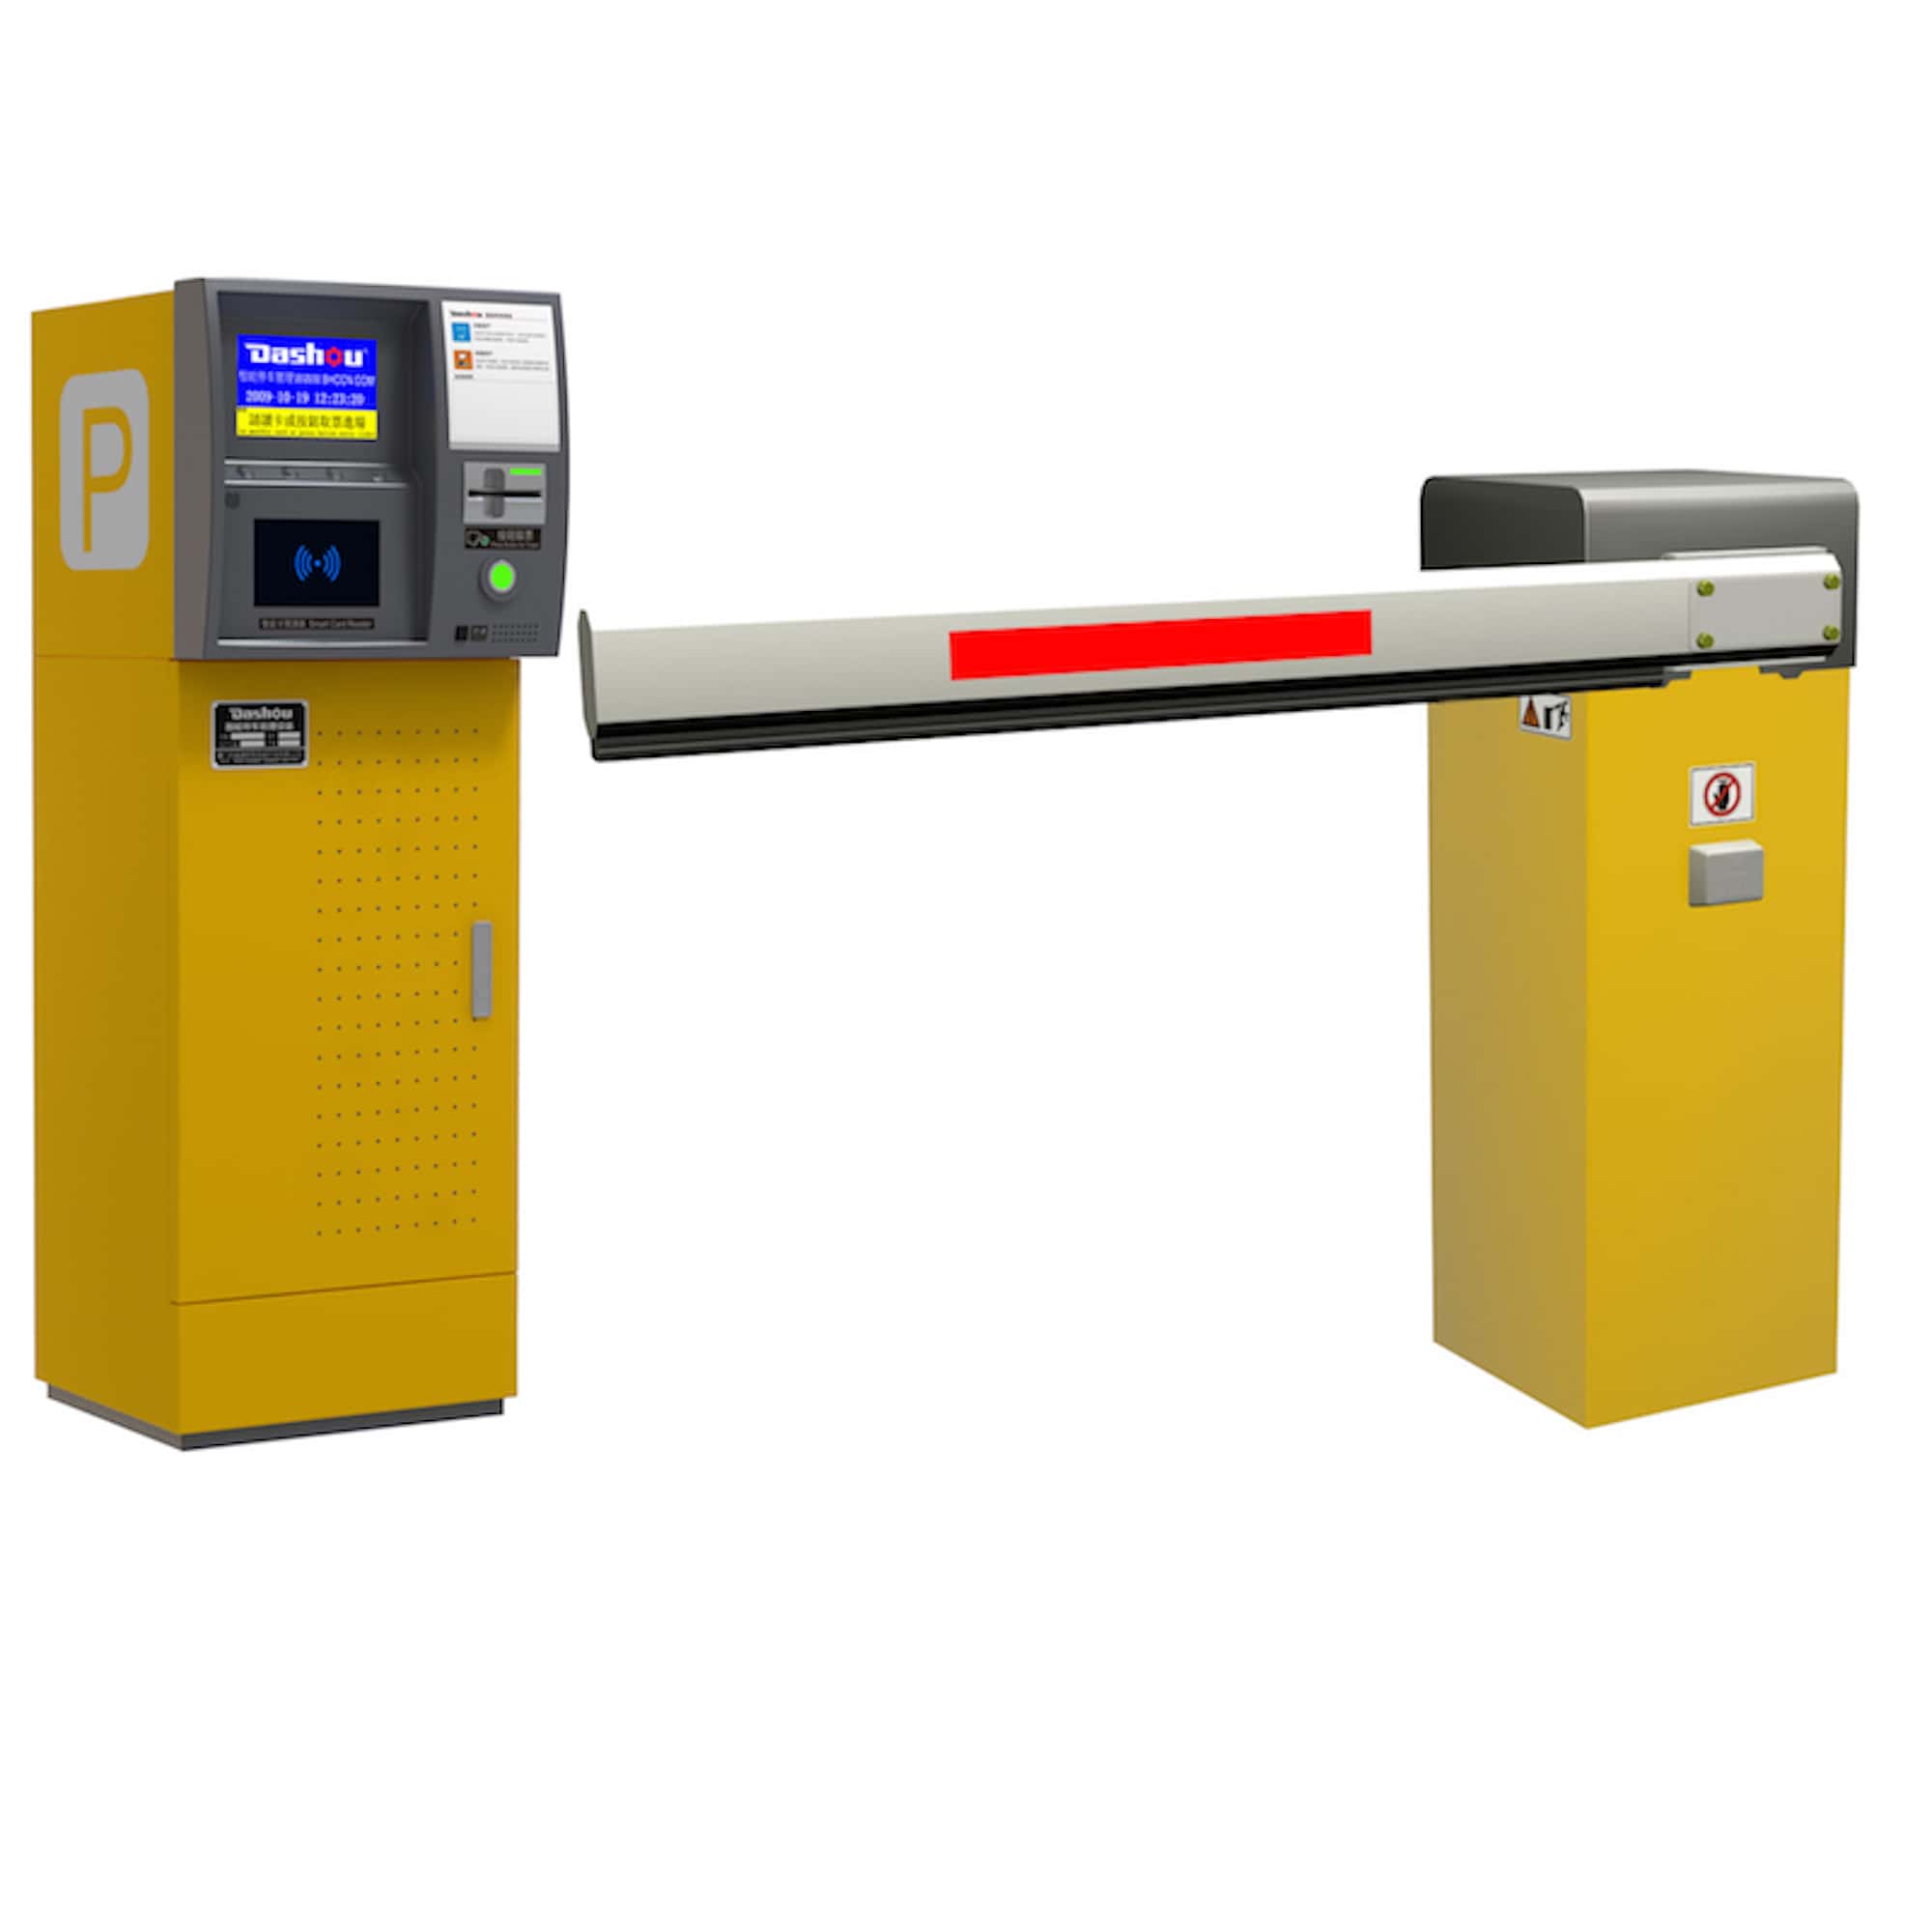 V32-810F Pay at Exit Card Dispensing Parking Management System
